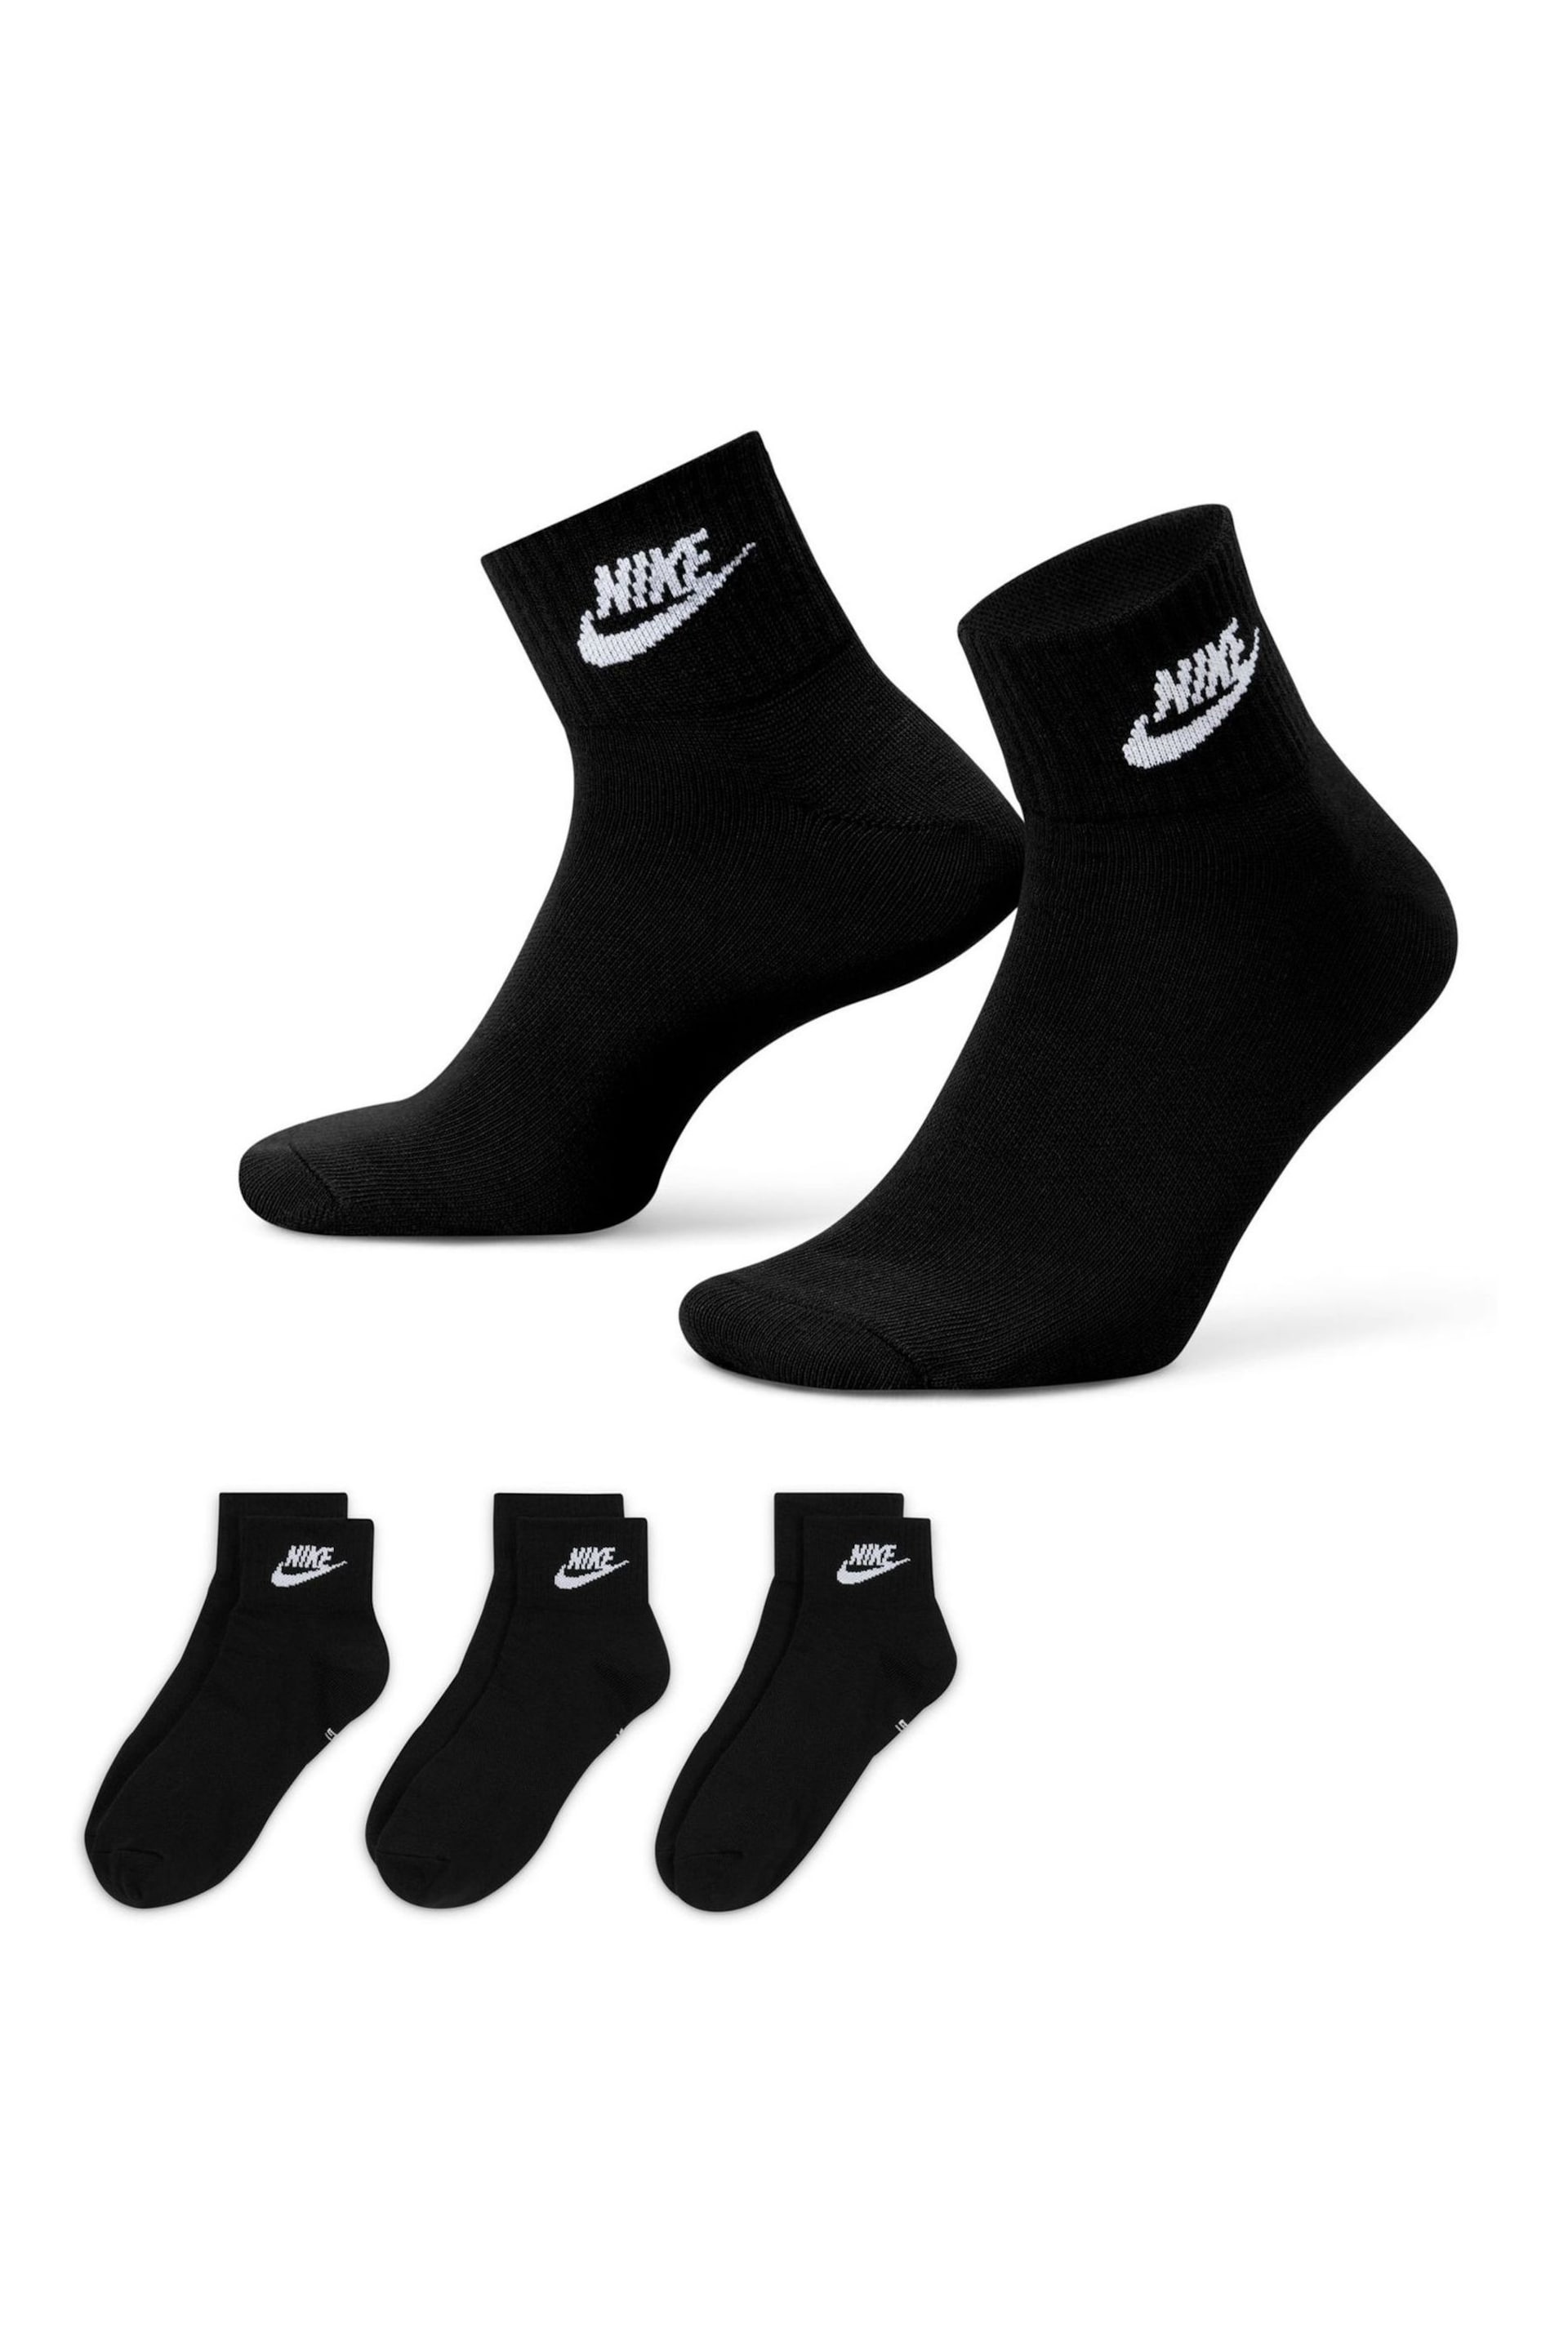 Nike Black Everyday Essentials Socks 3 Pack - Image 1 of 4